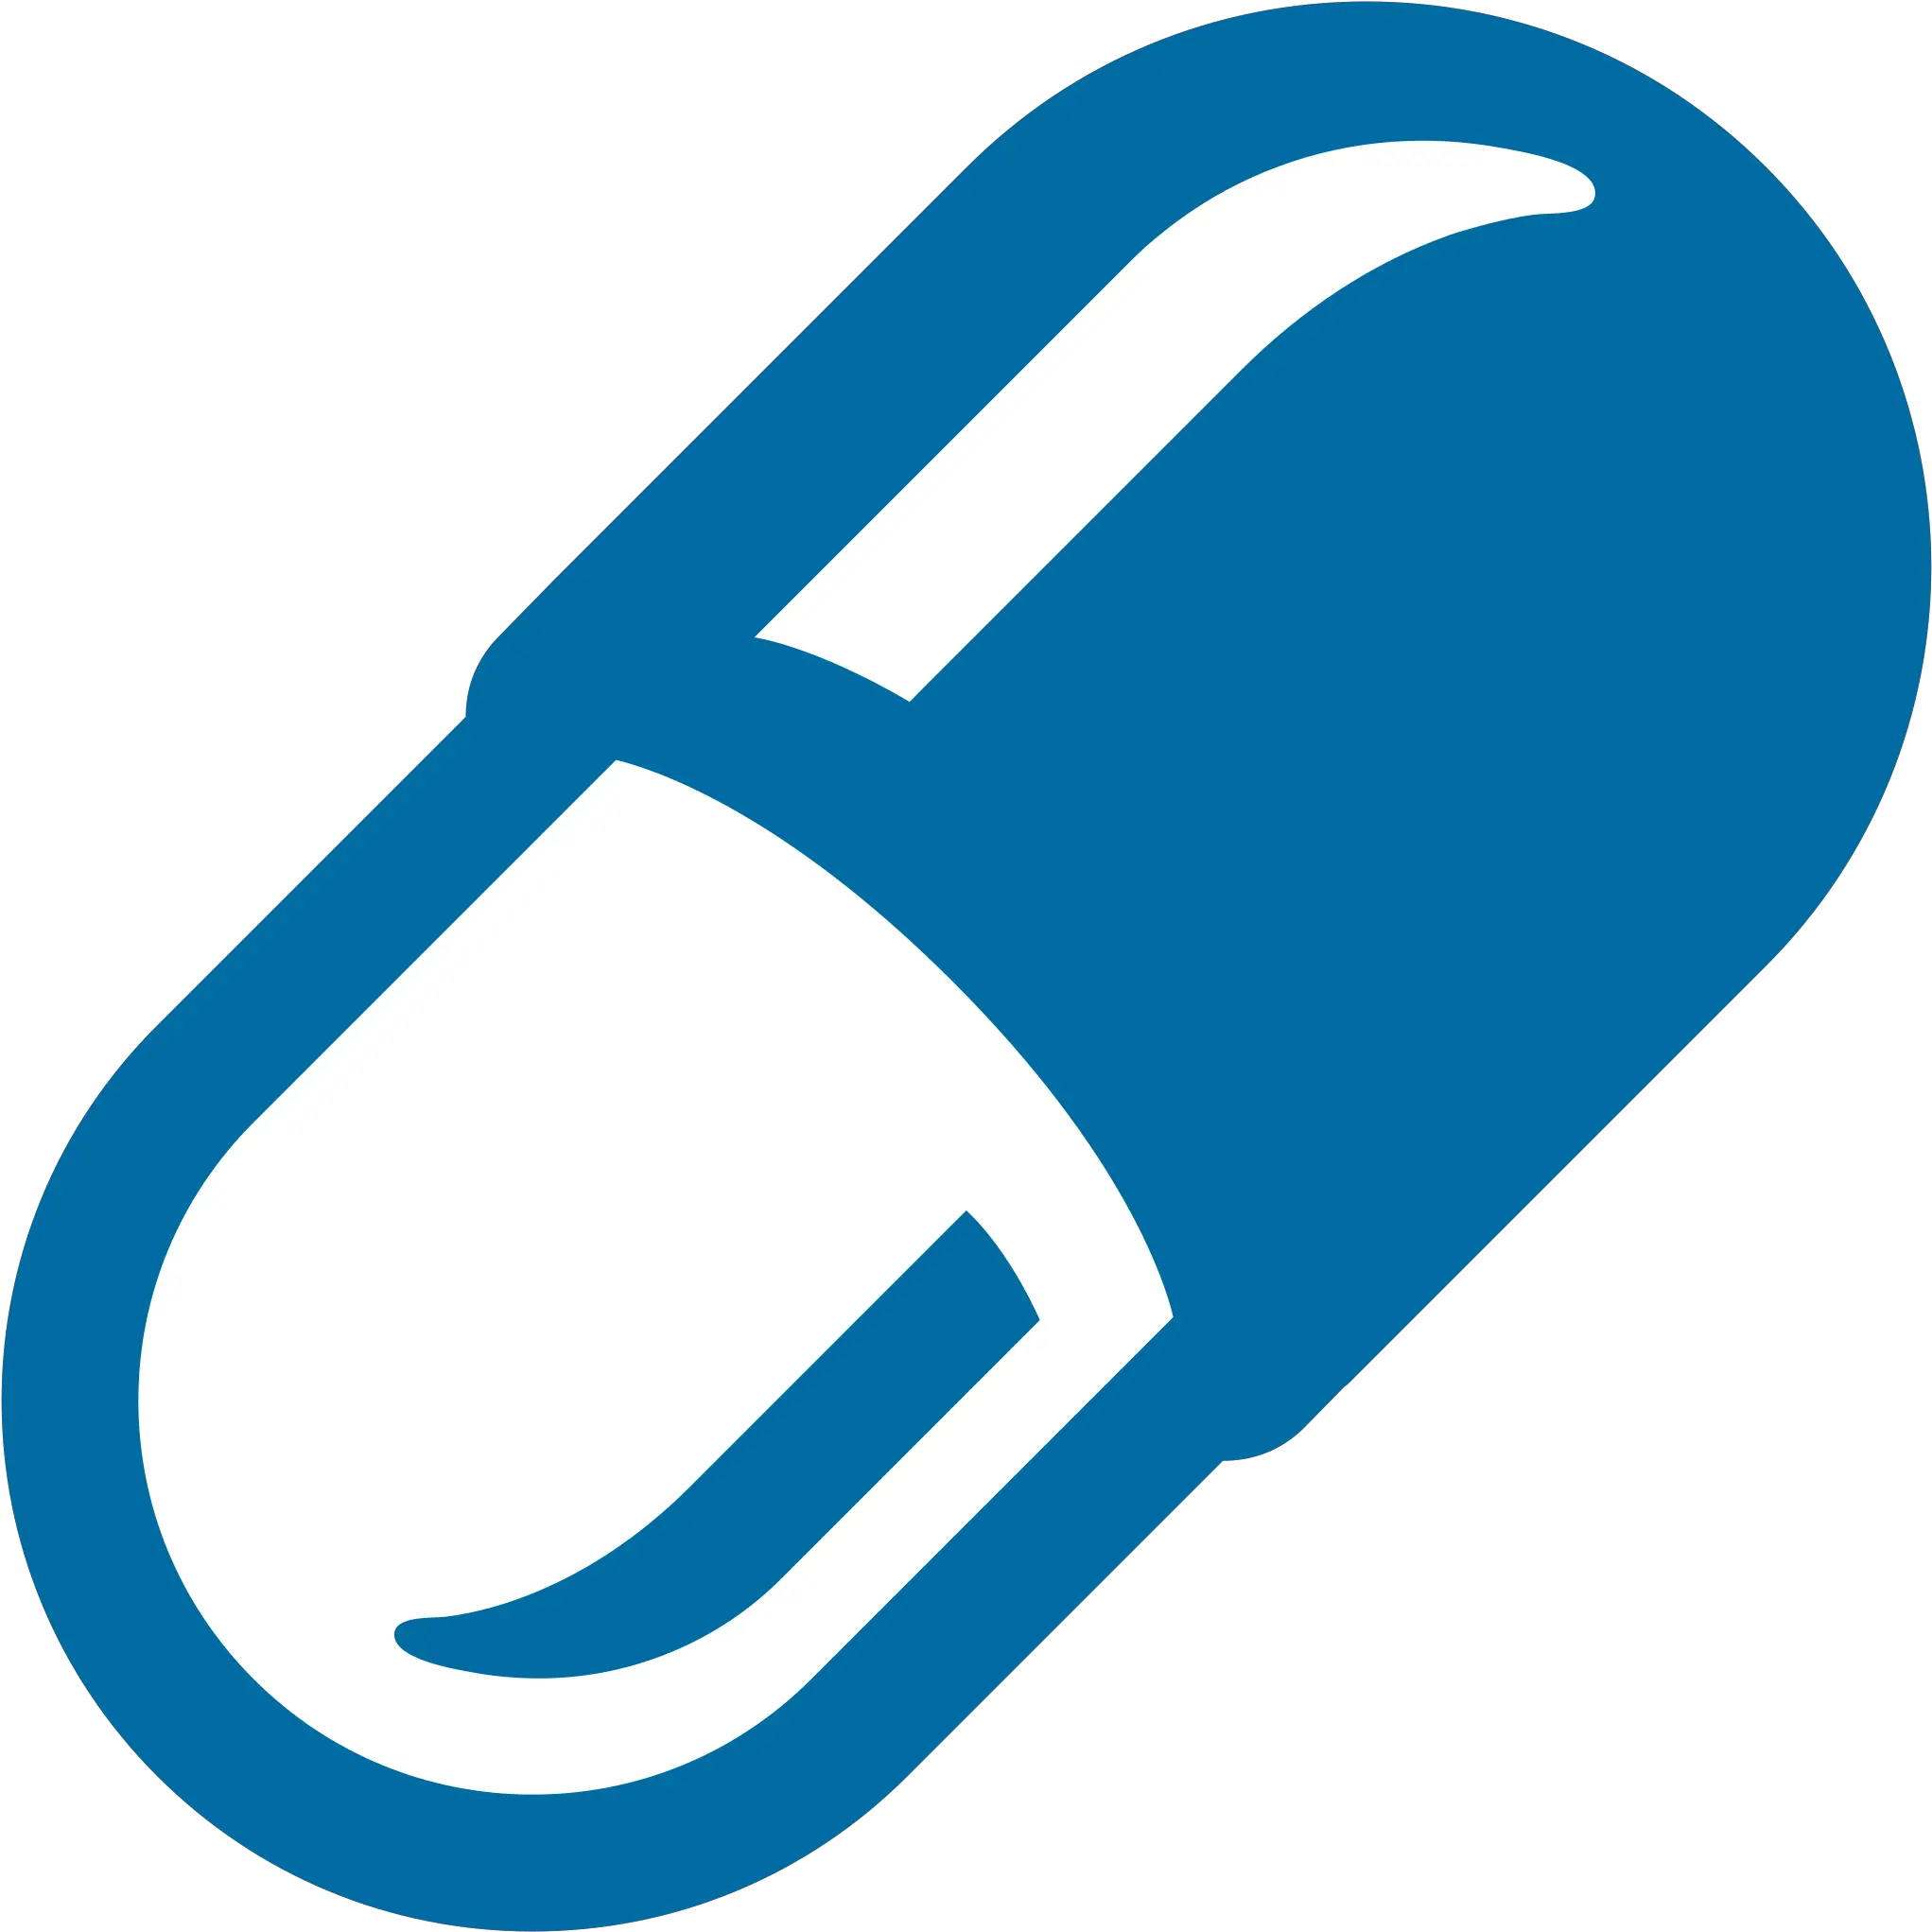 Fileemoji U1f48asvg Wikimedia Commons Bluepill Png Emojis Icon